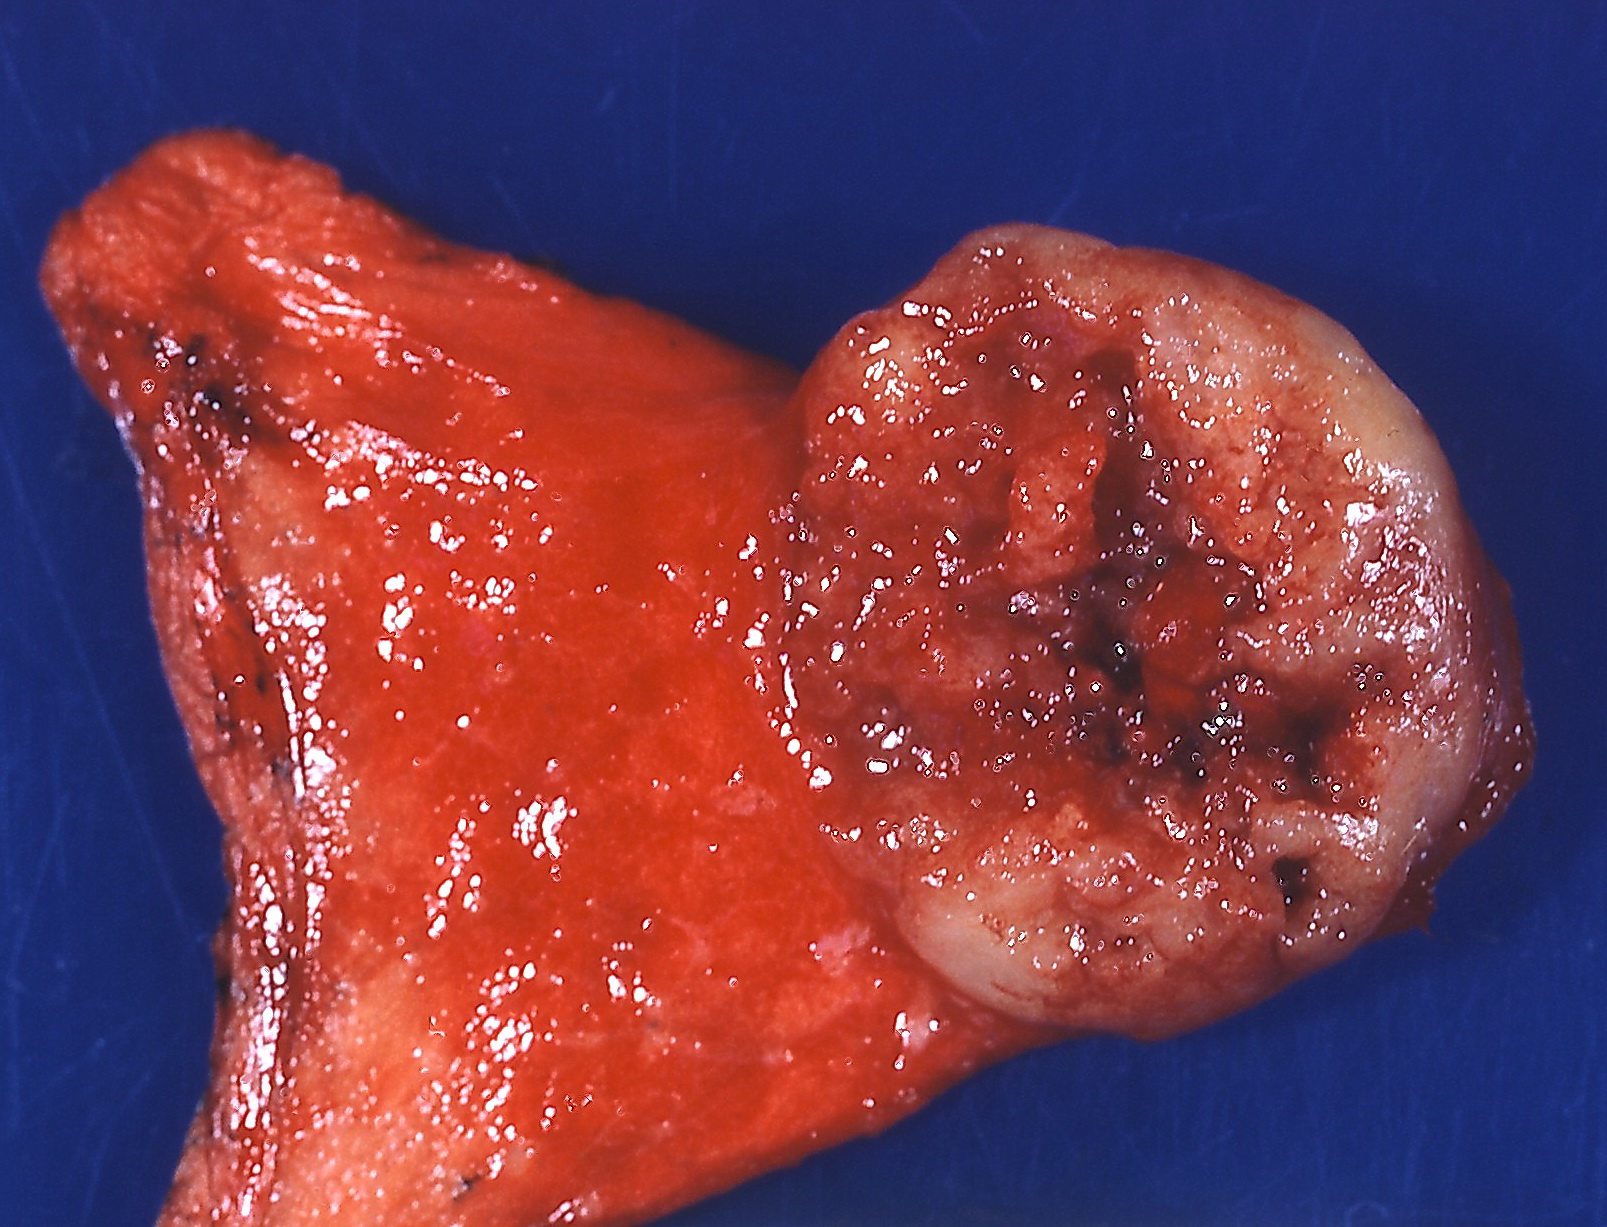 Gross pathology mucoepidermoid carcinoma.[17]